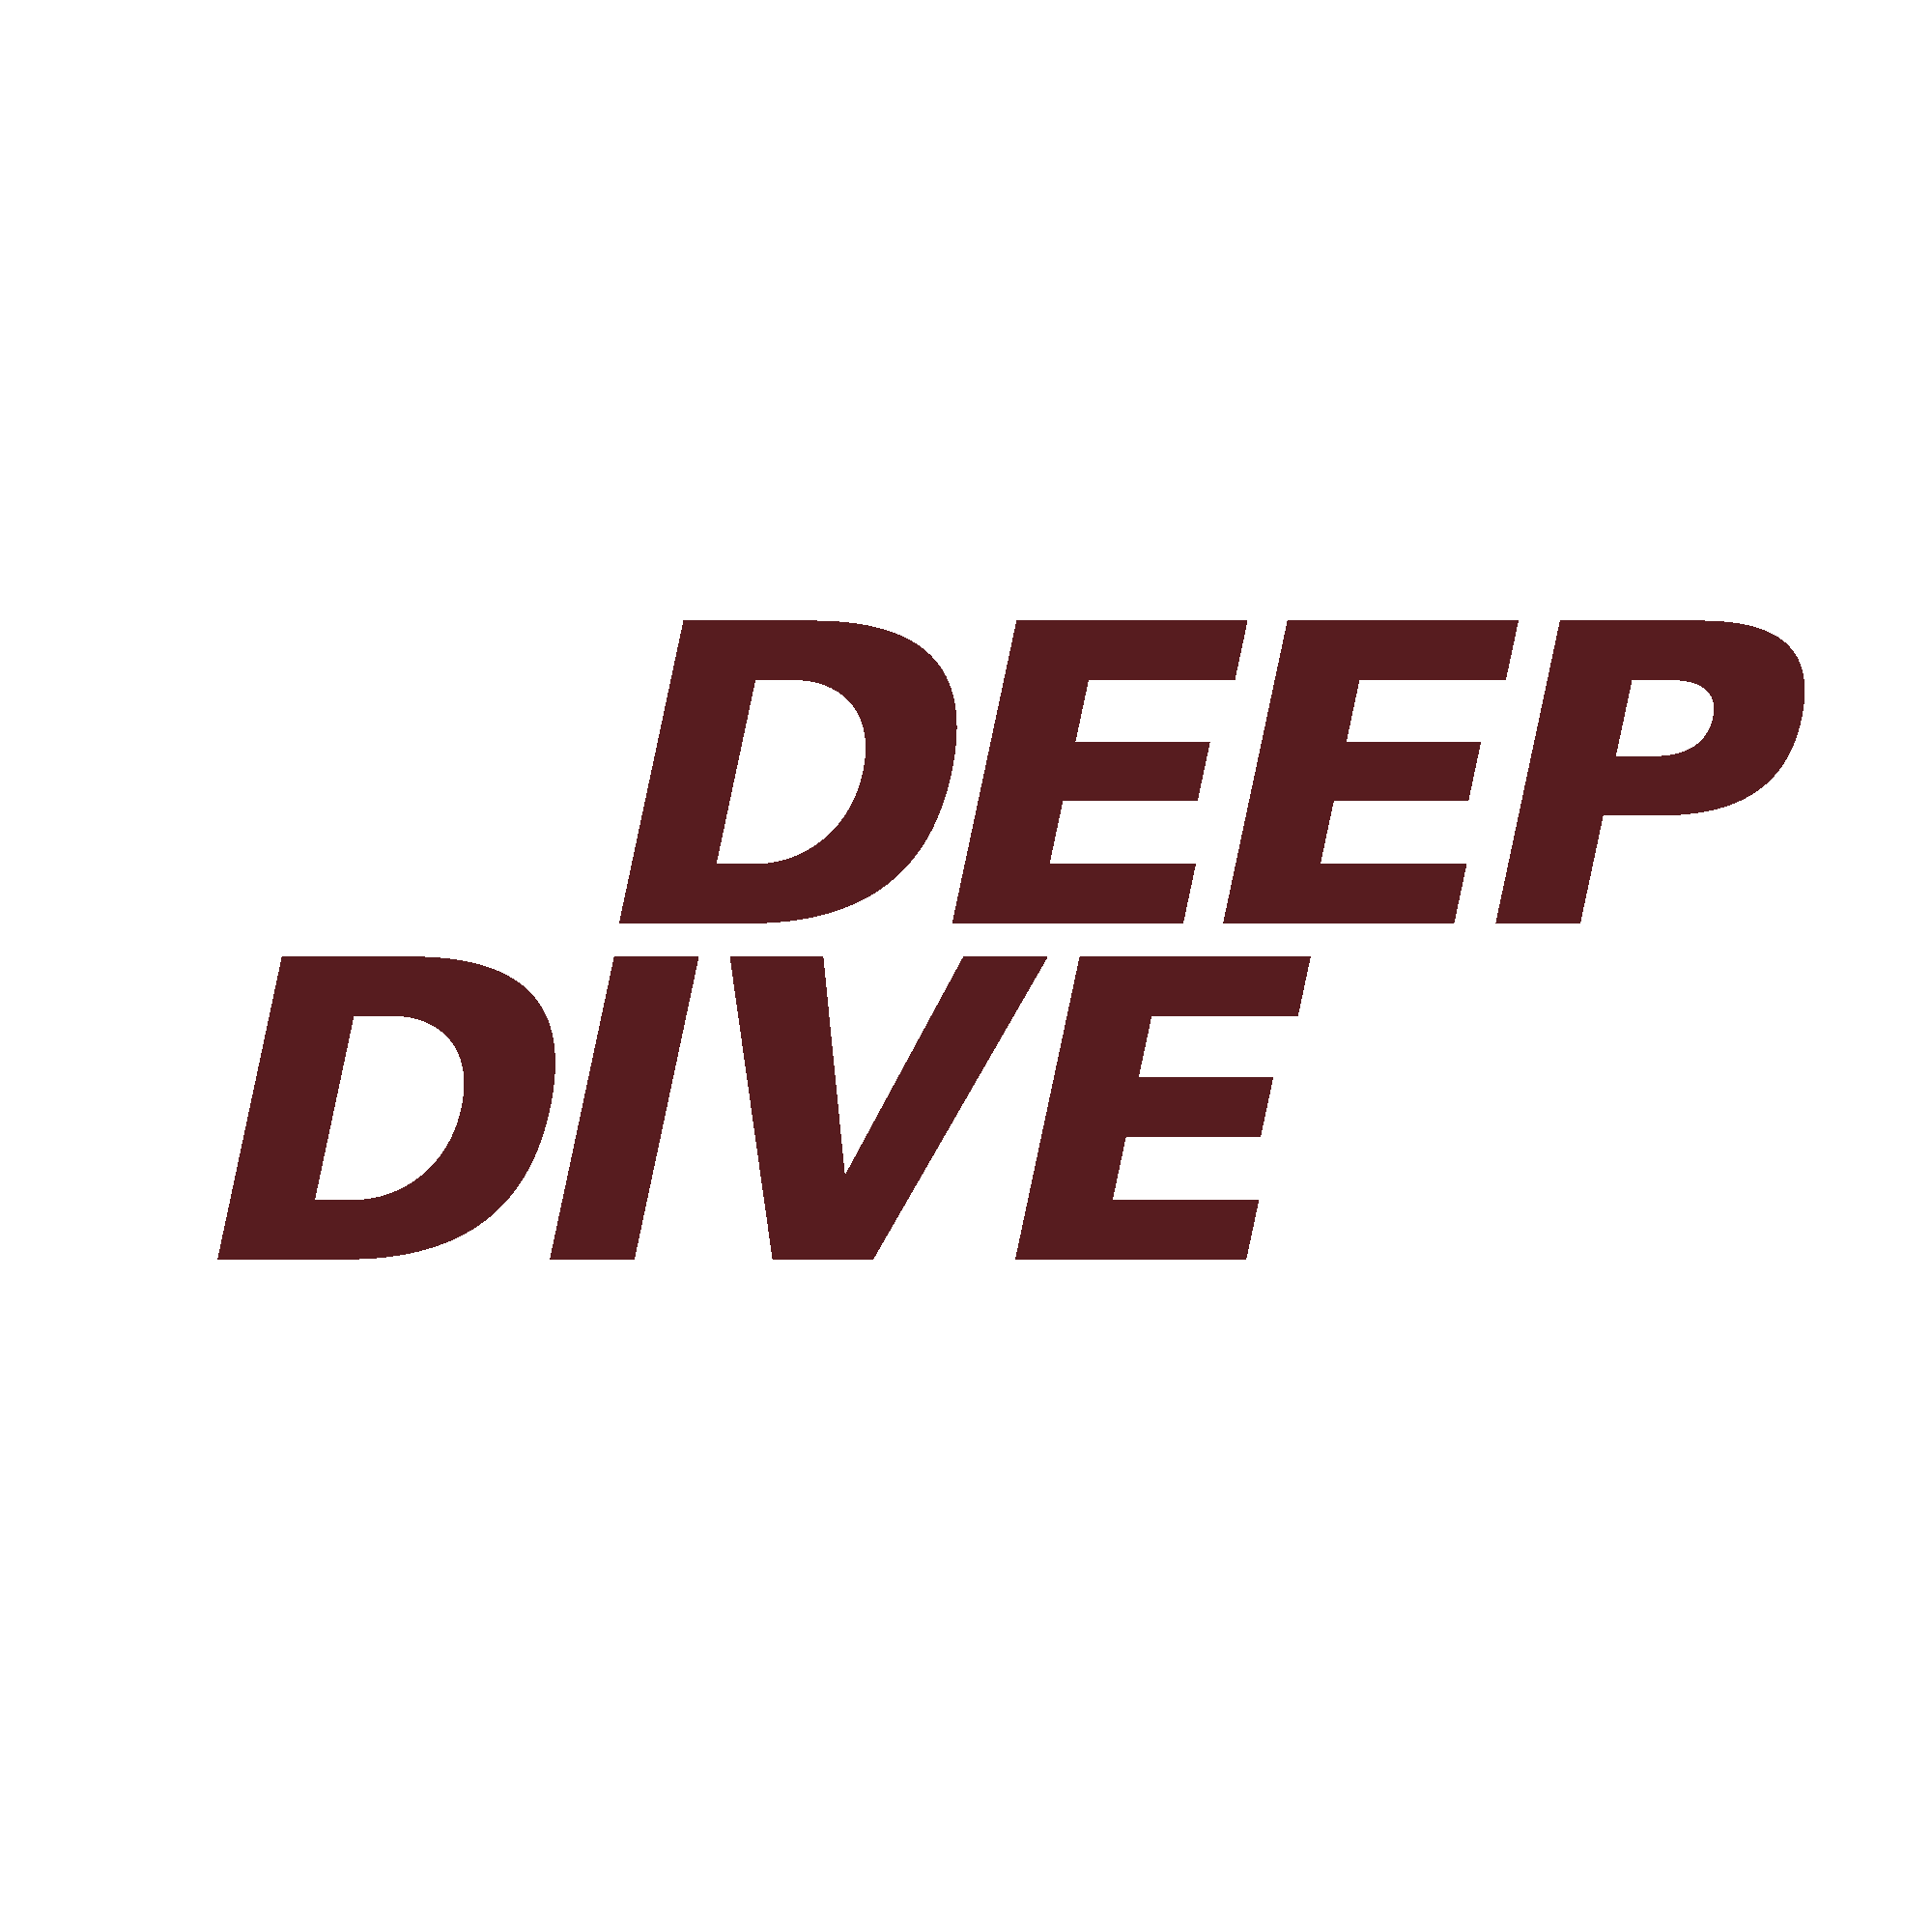 Deep Dive logo with tagline